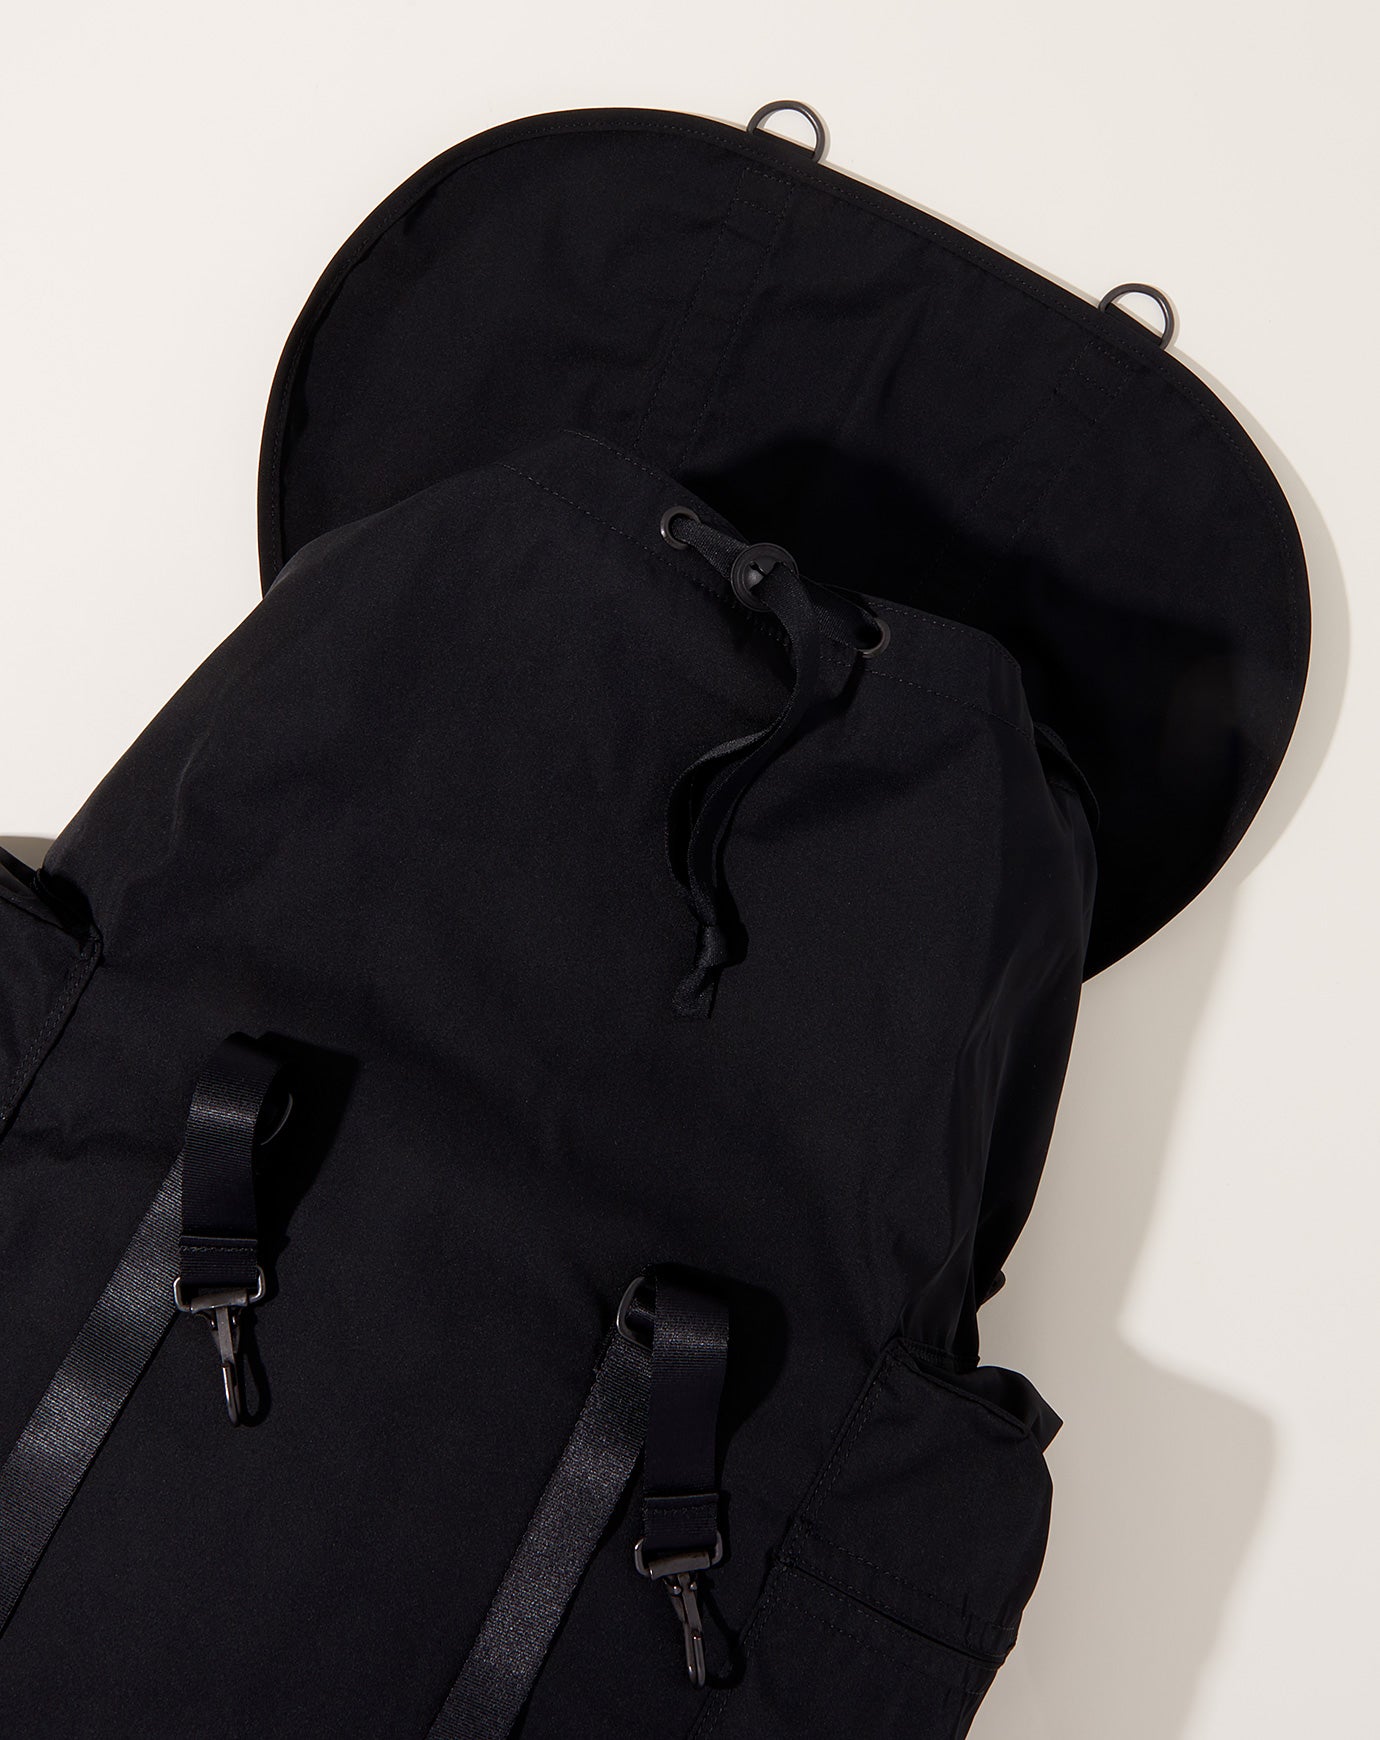 Amiacalva Gabardine Backpack XL in Black